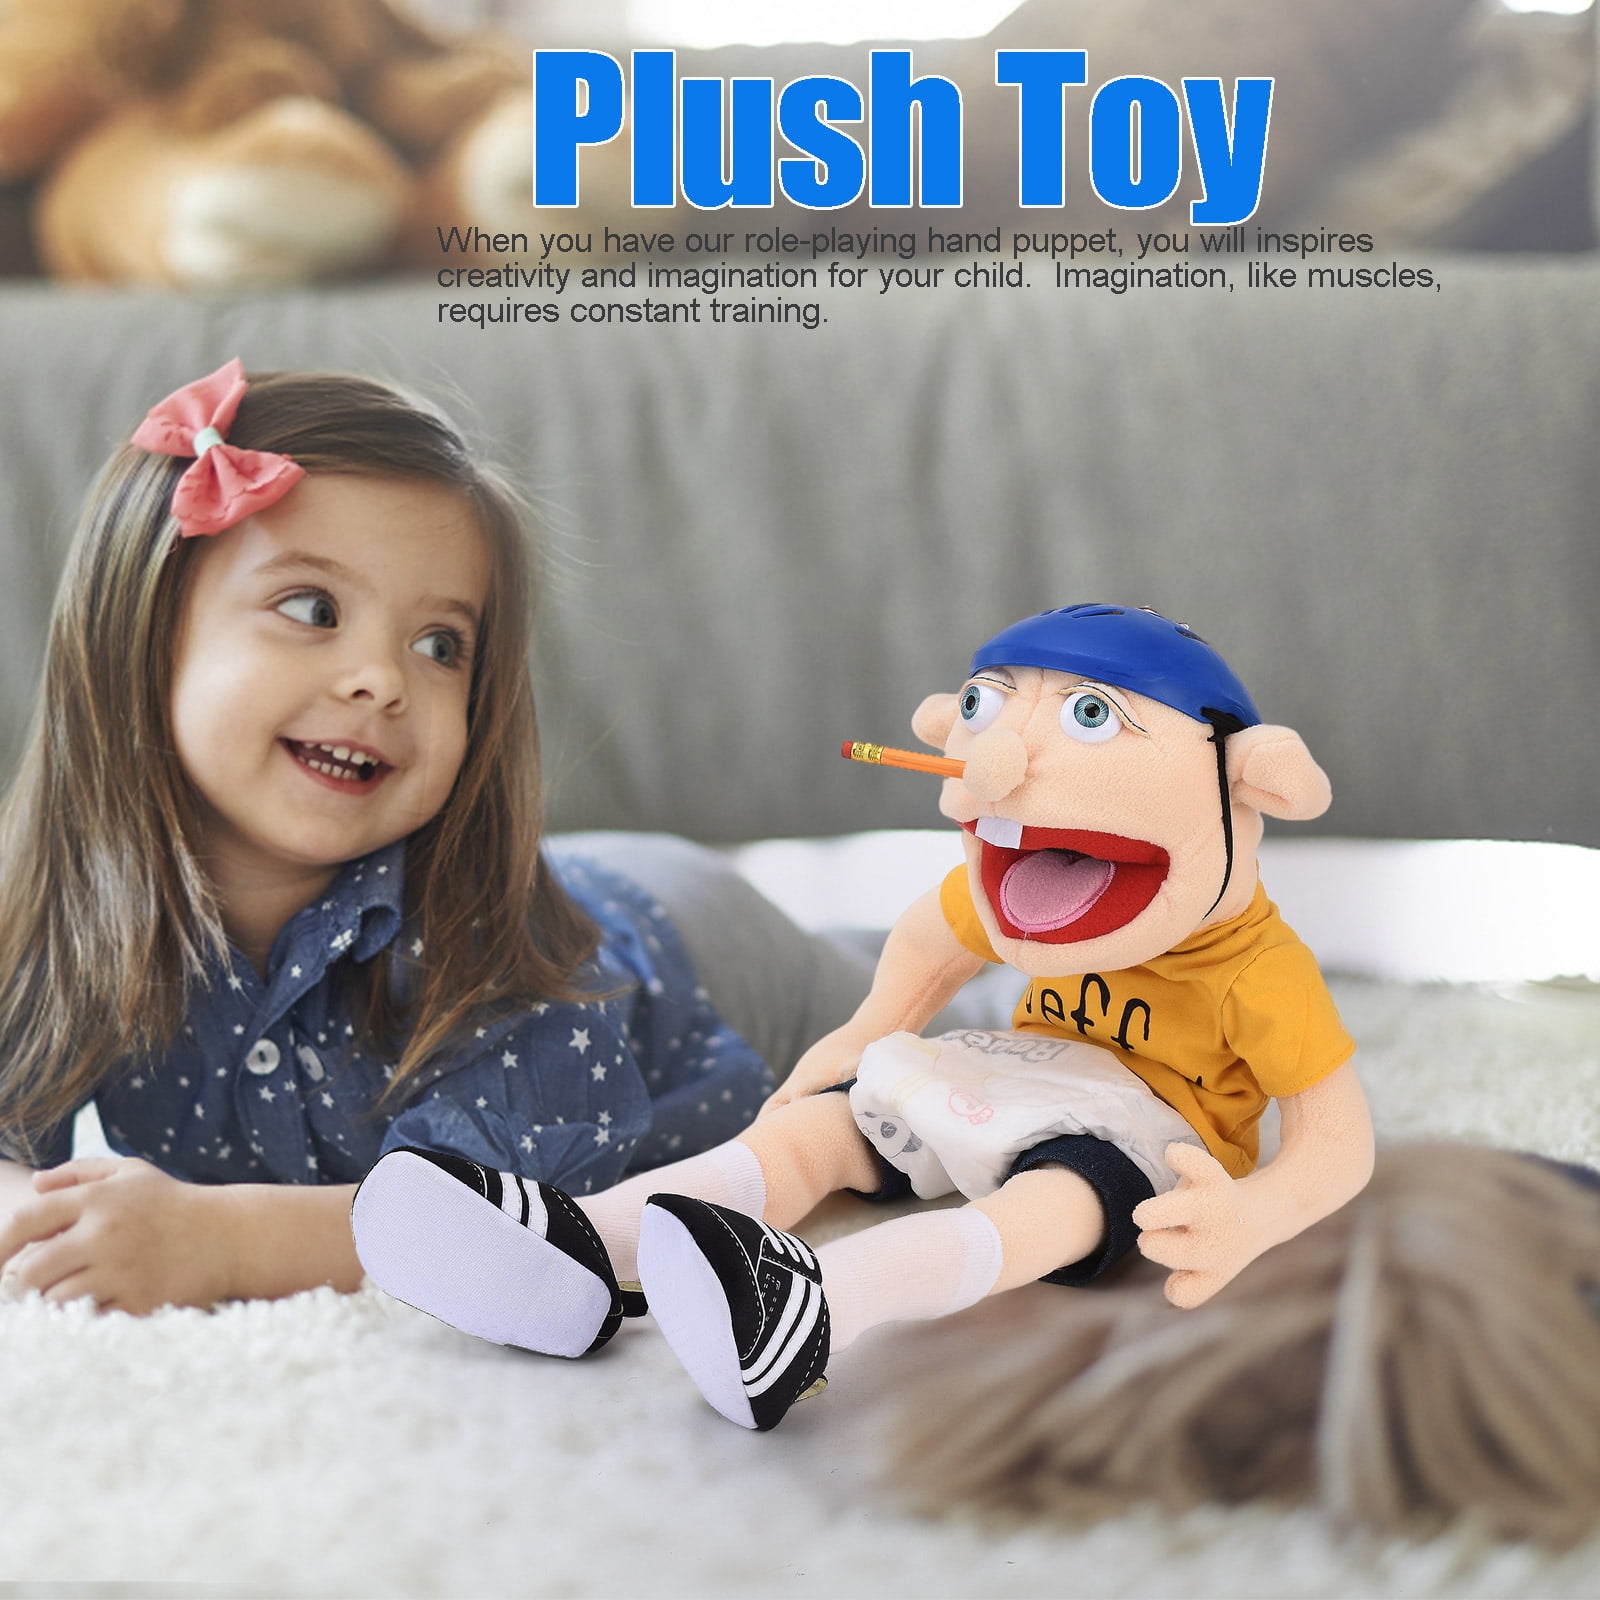 Thicc Jeffy Plush Toy Dolls Cute Stuffed Soft Toy Birthday